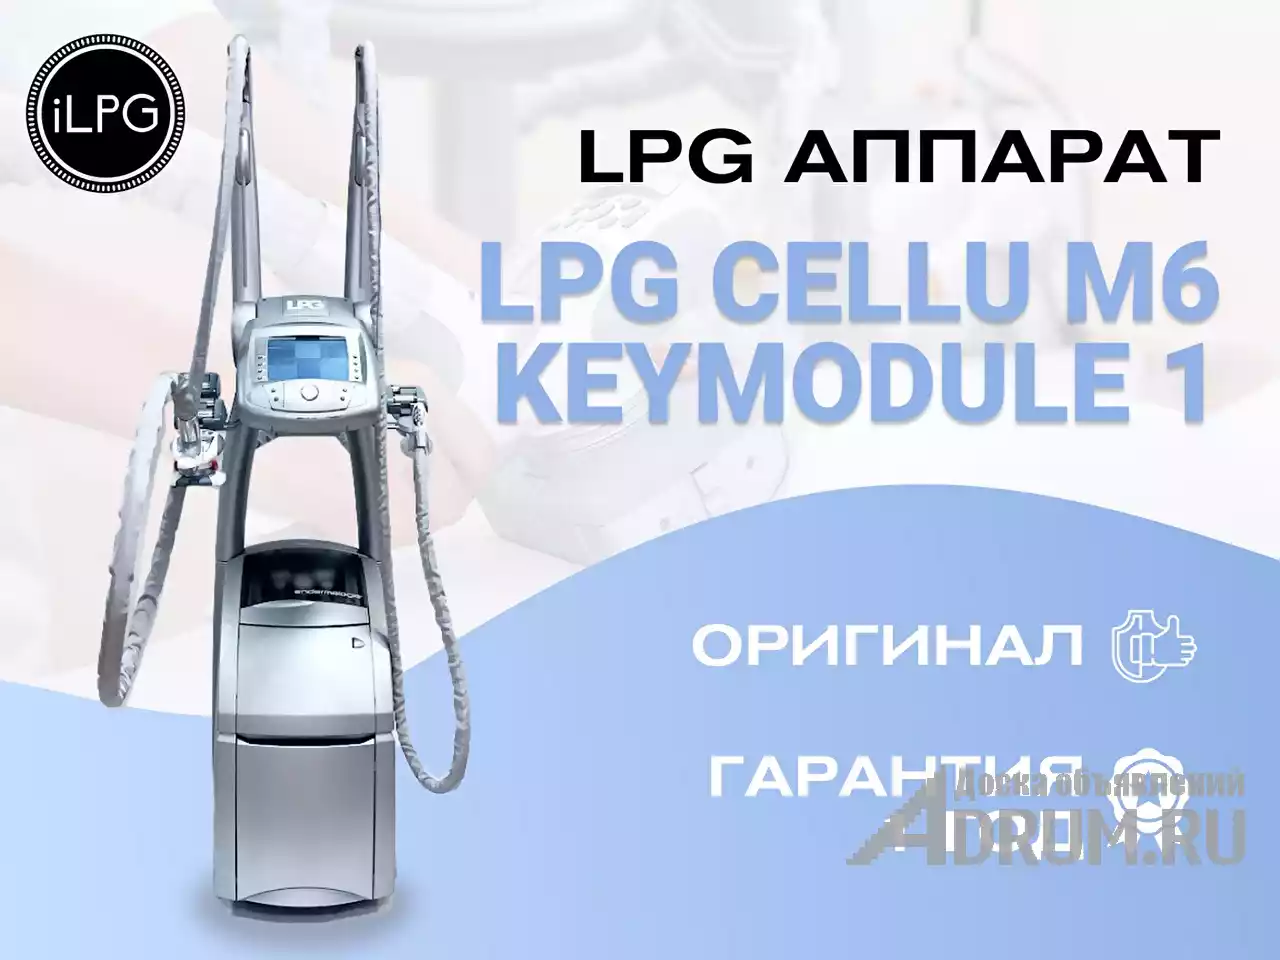 Аппарат LPG для массажа cellu m6 keymodule 1 в Москвe